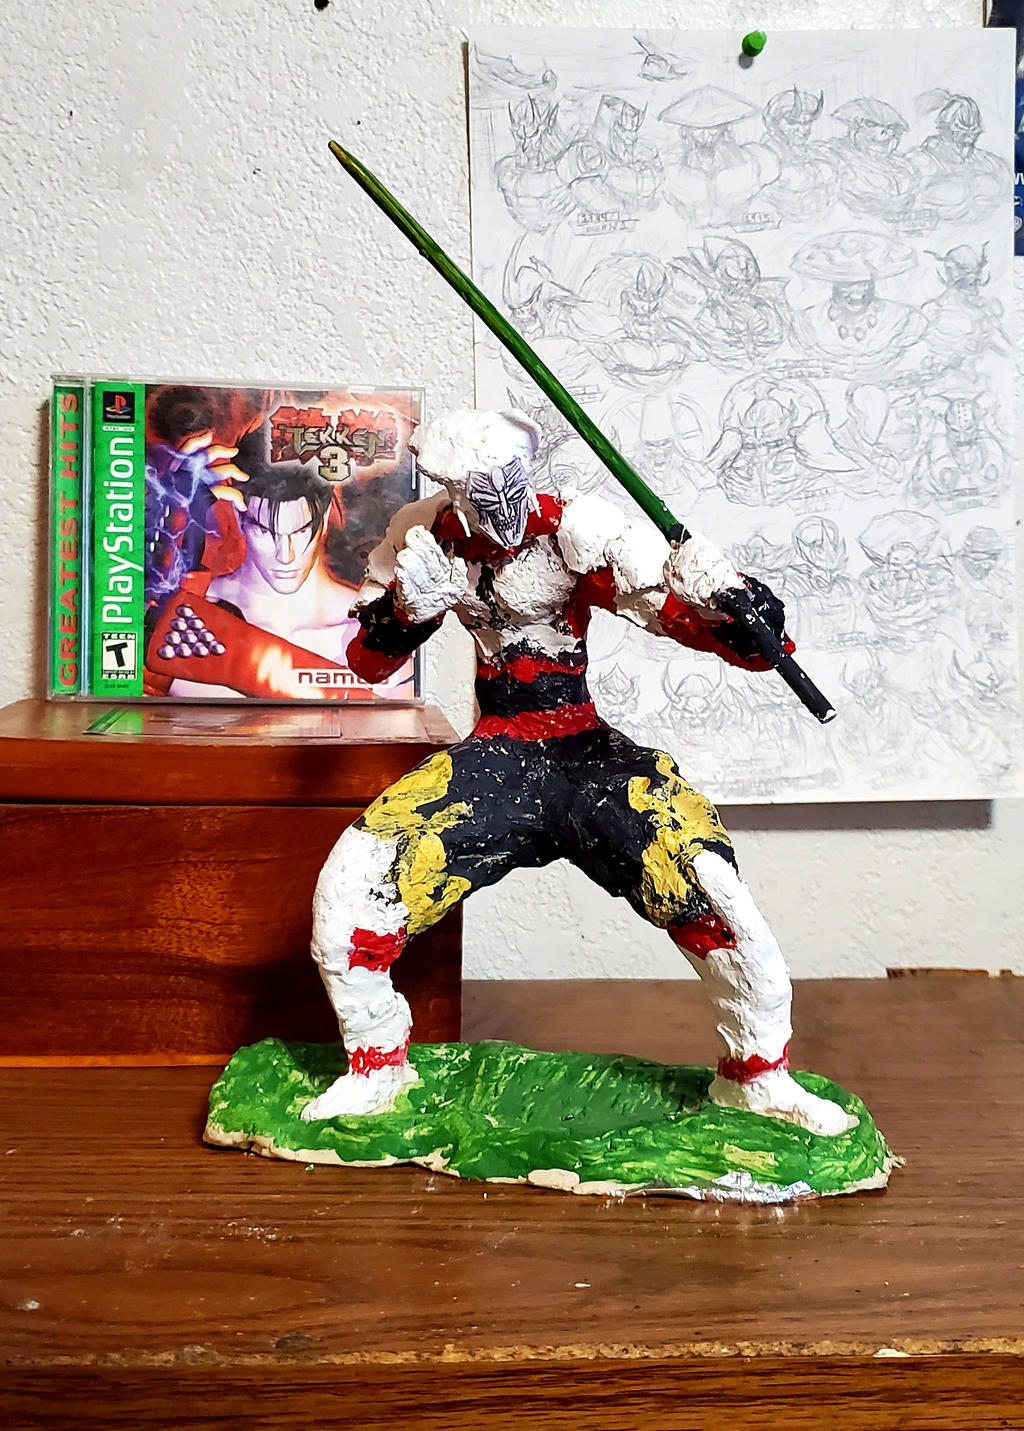 Yoshimitsu - Tekken 3 action figure